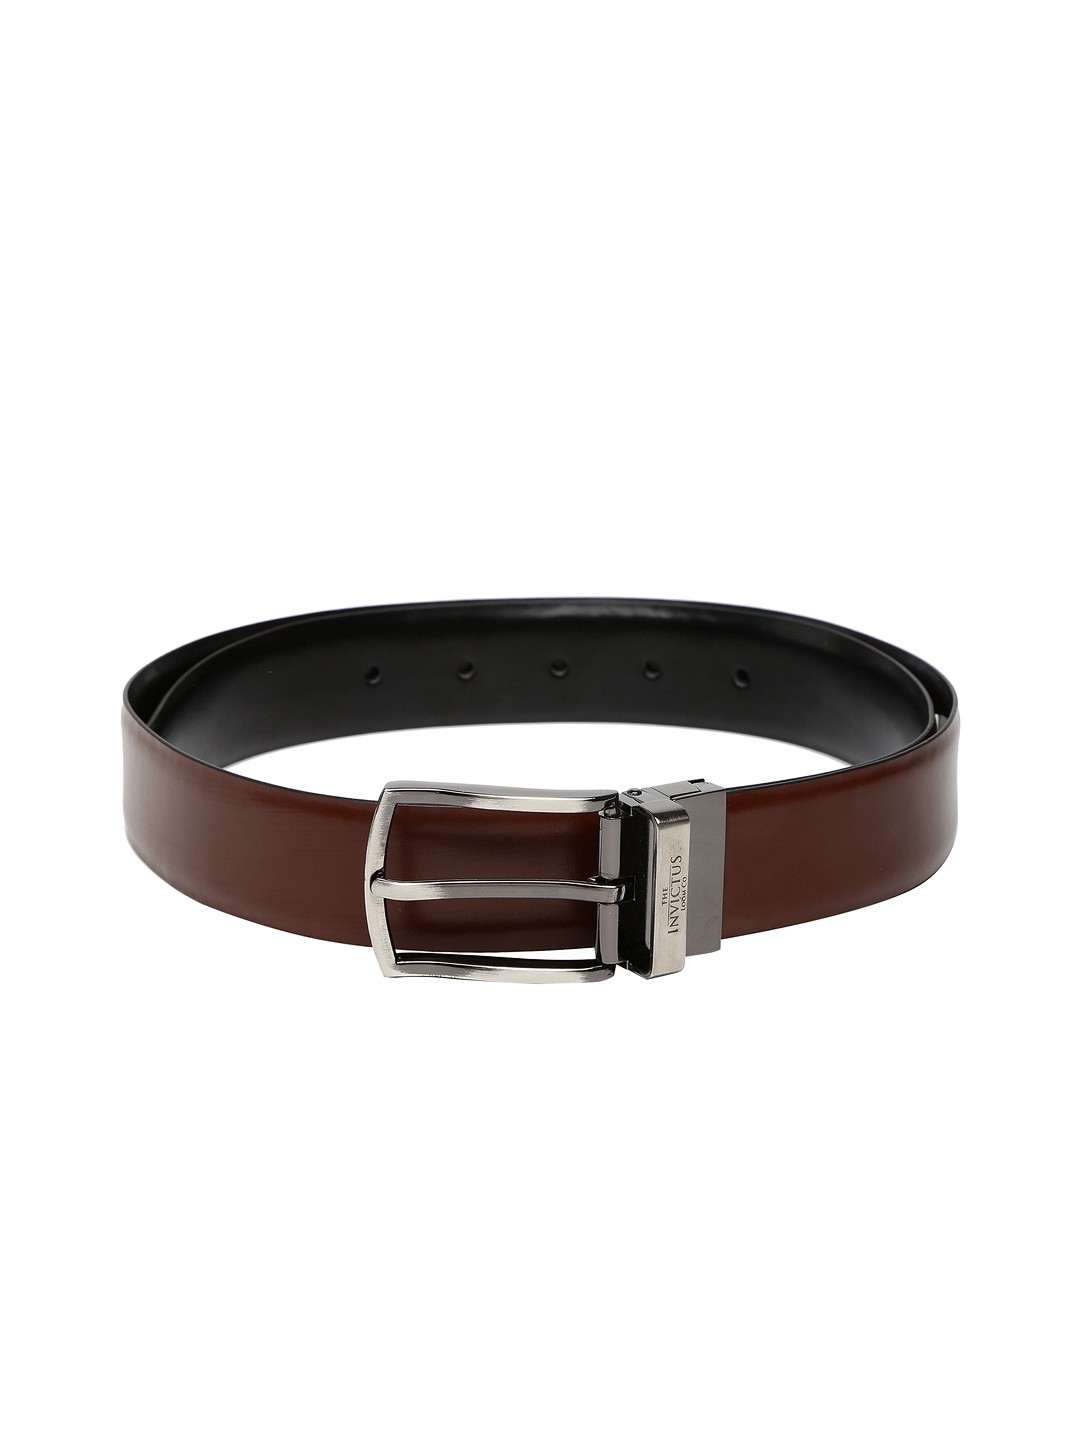 INVICTUS Men Black & Brown Leather Reversible Belt